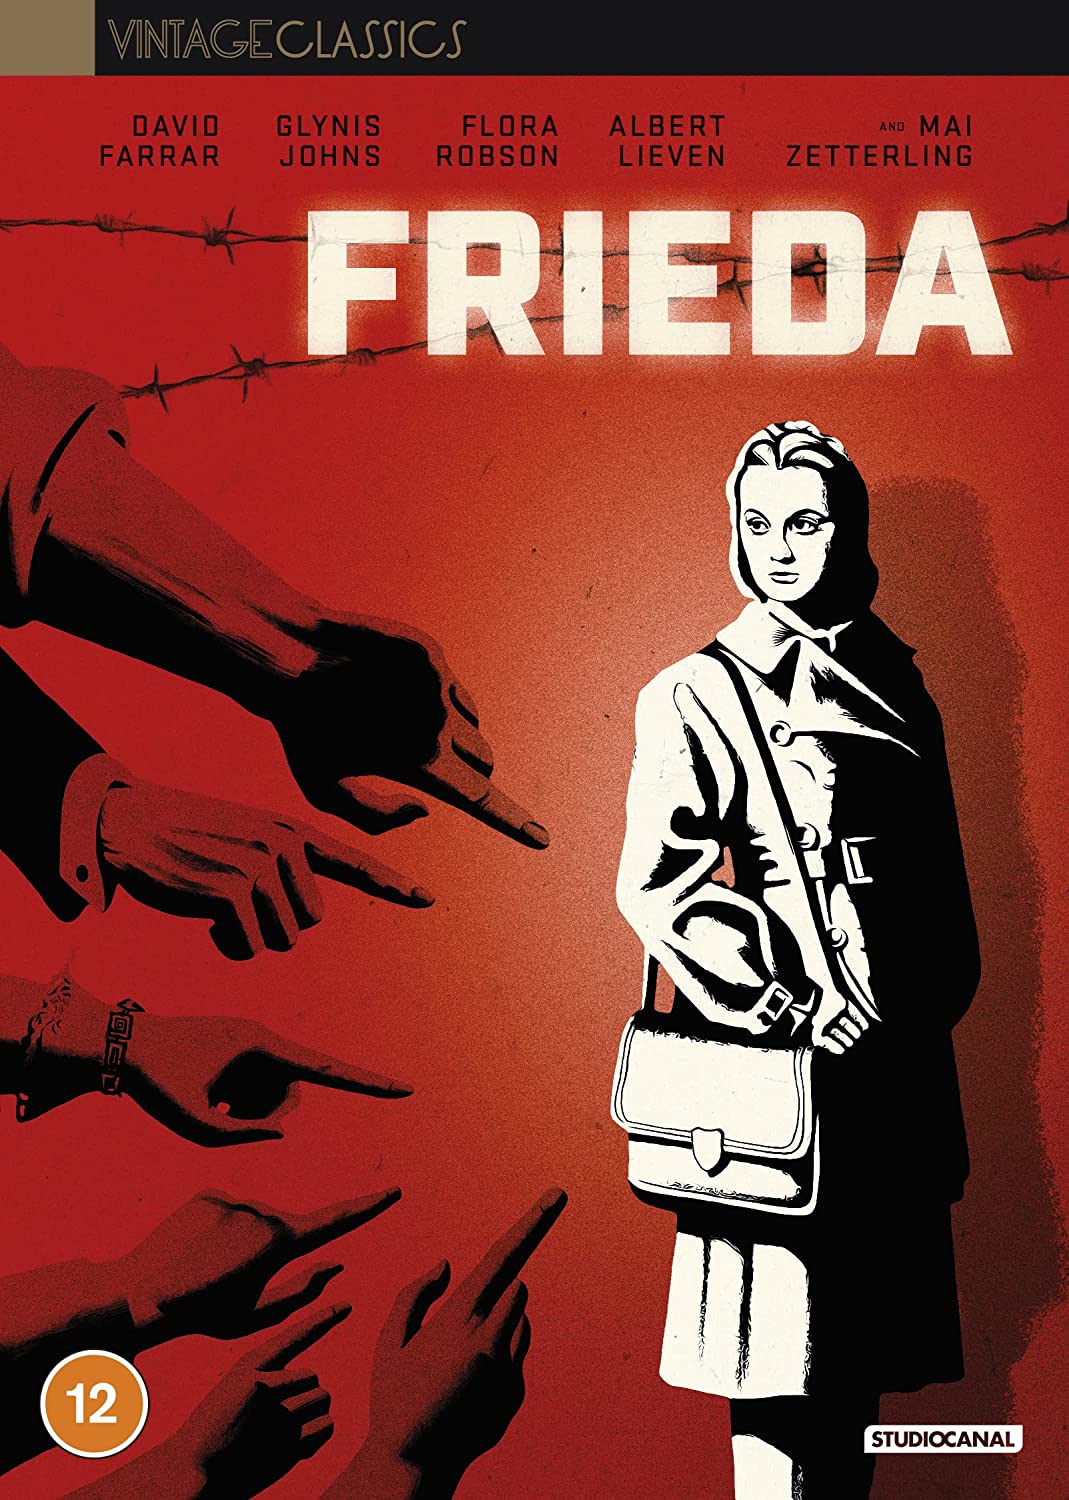 Frieda (Vintage Classics) [DVD]